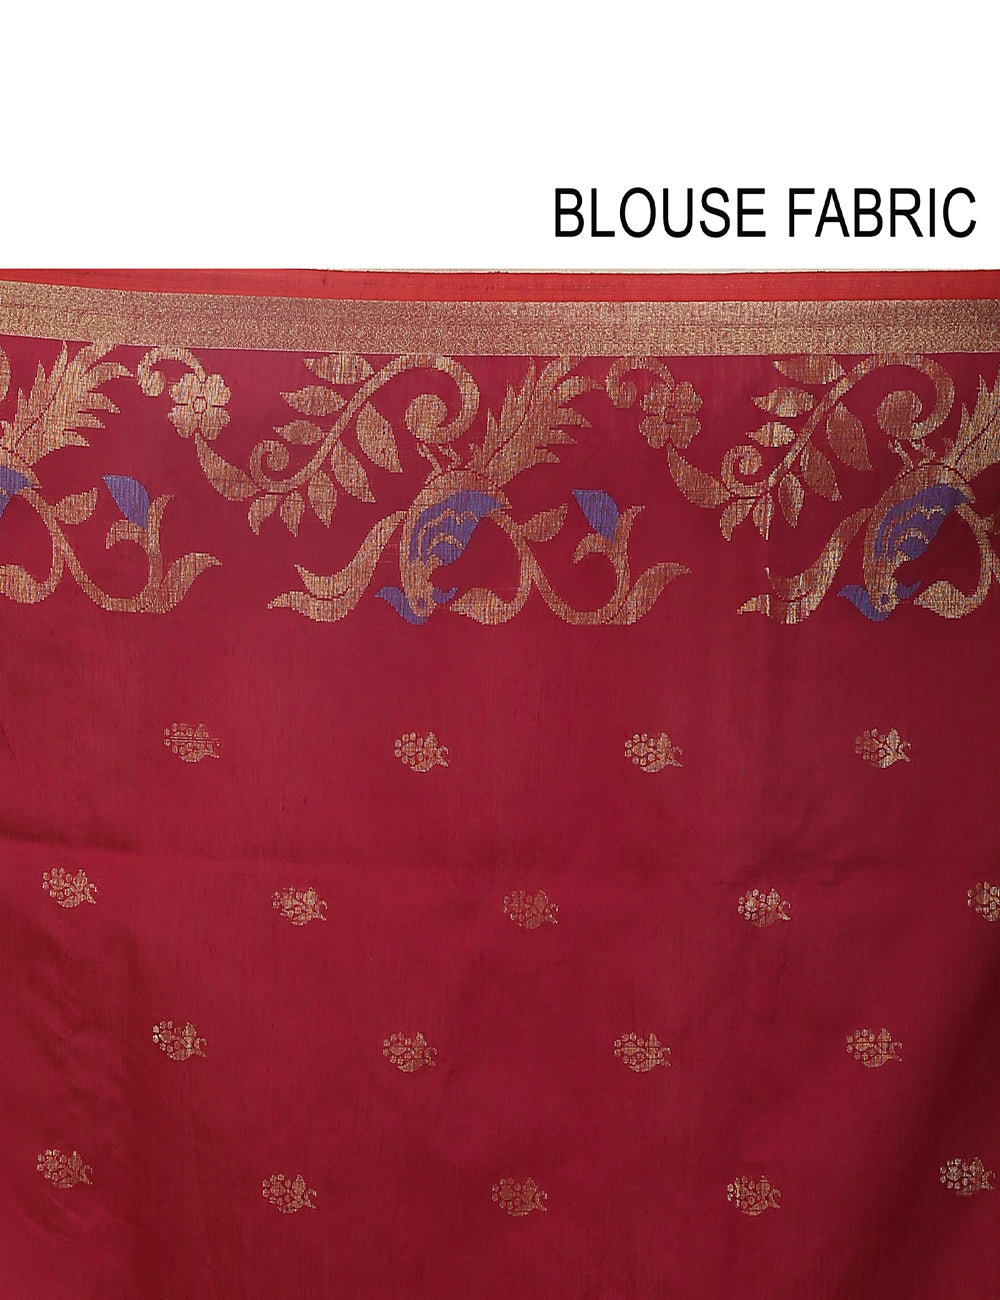 Dark pinkish maroon handloom art silk and cotton bengal saree